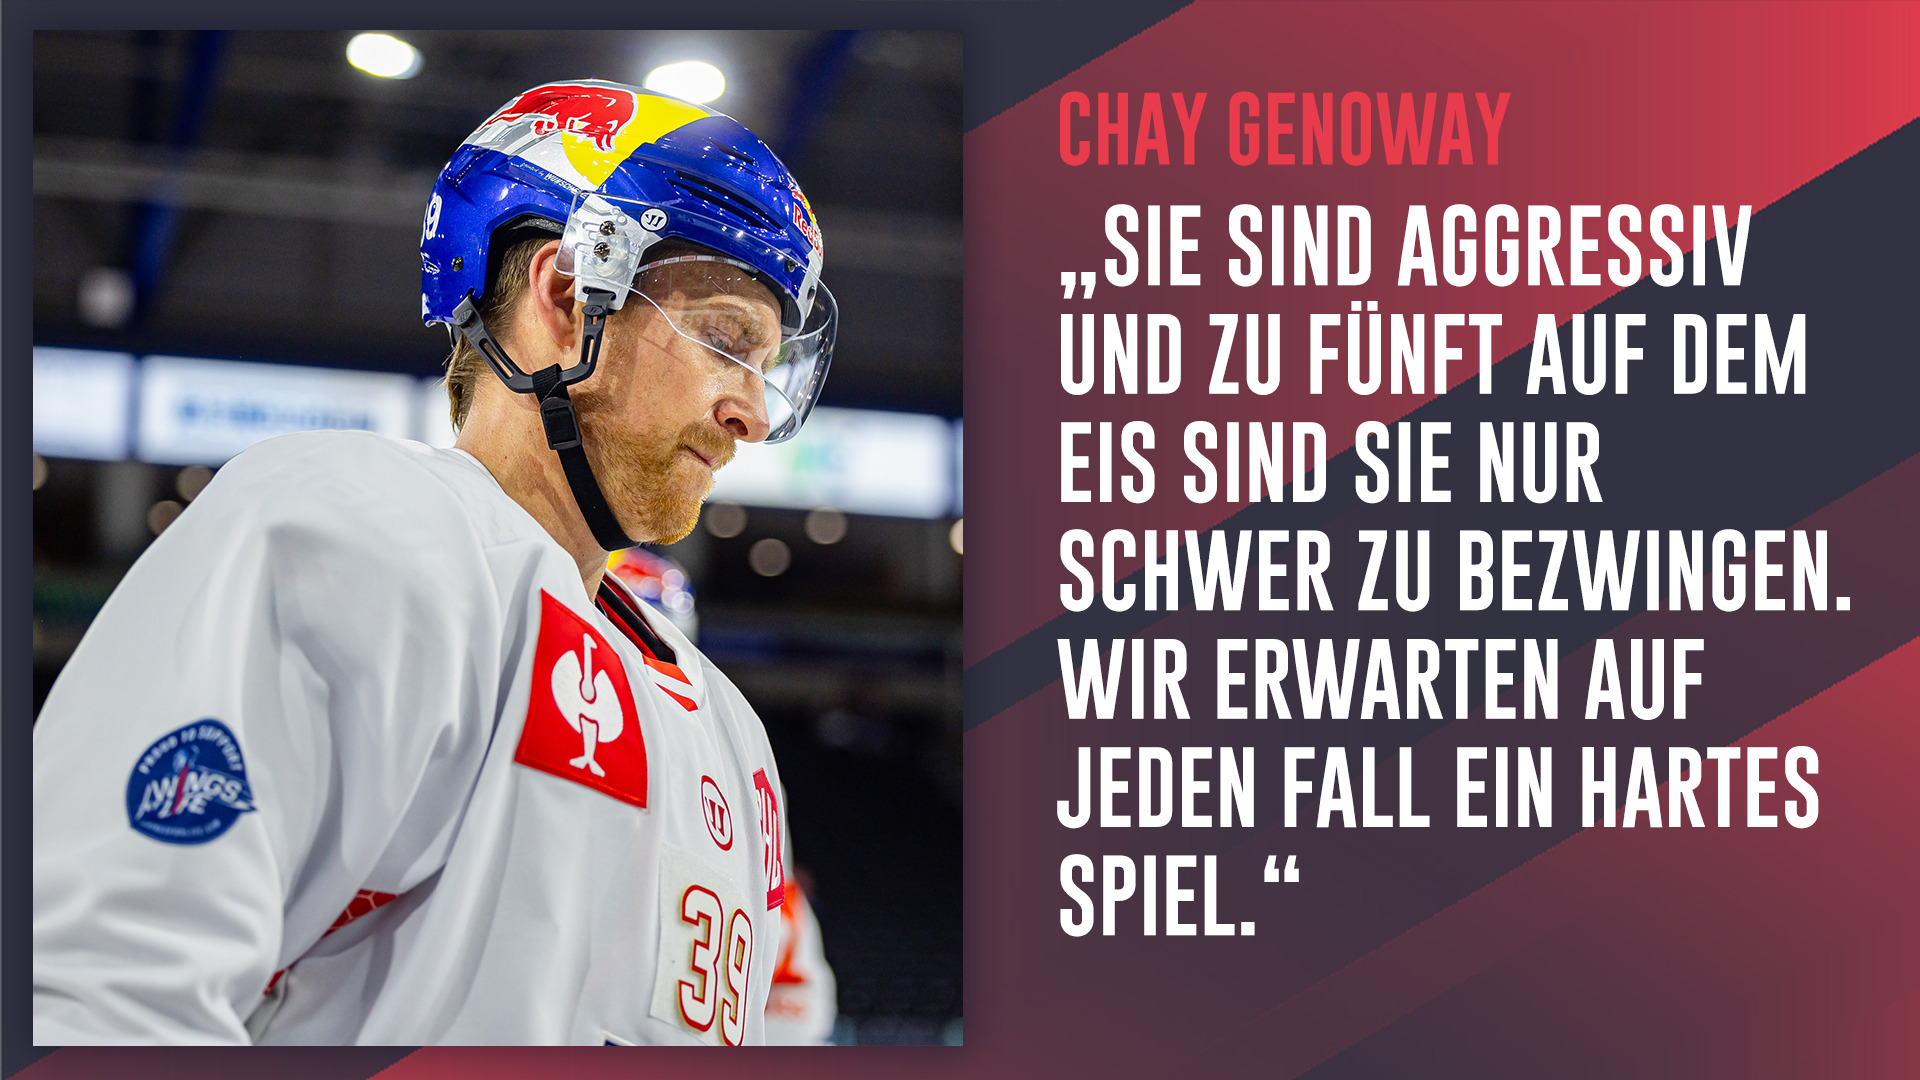 Statement: Chay Genoway